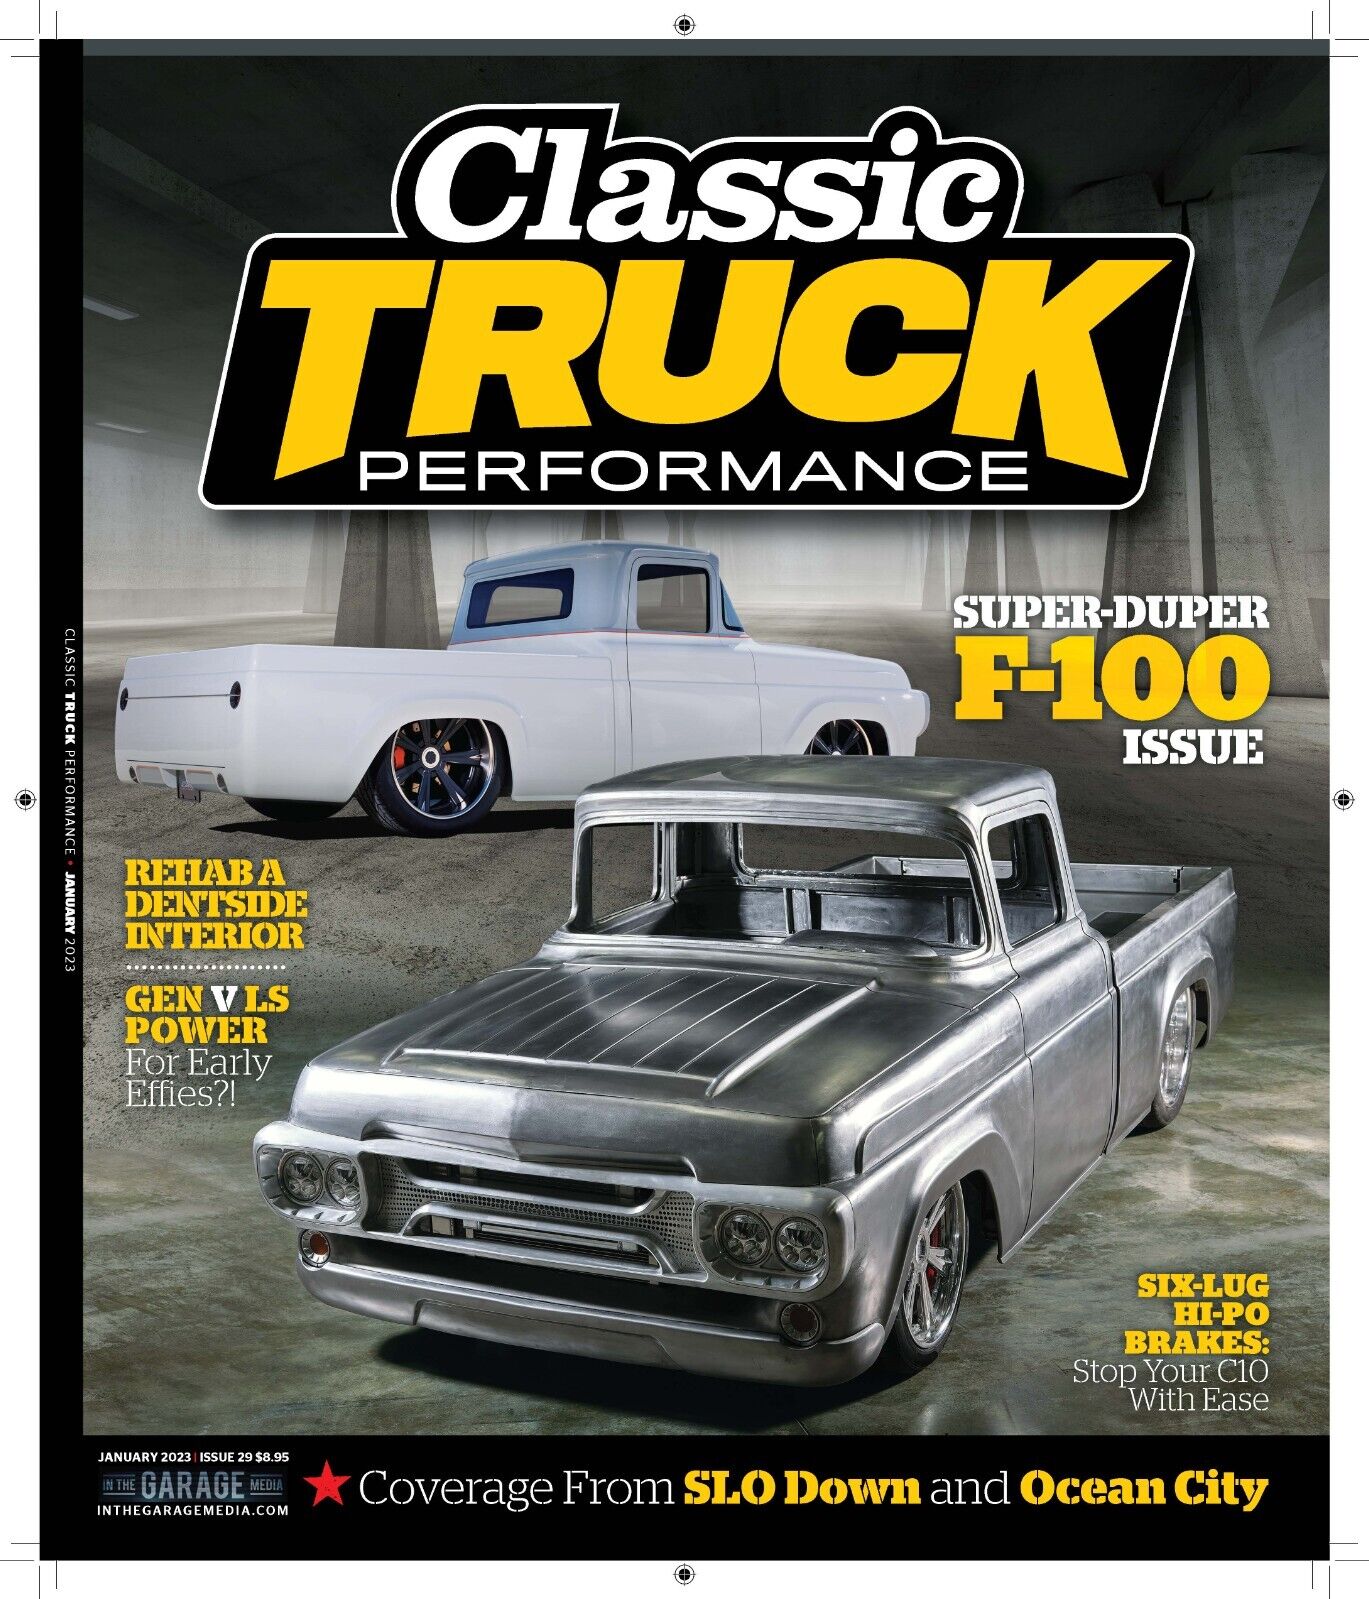 Classic Truck Performance Magazine Issue #29 January 2023 - New